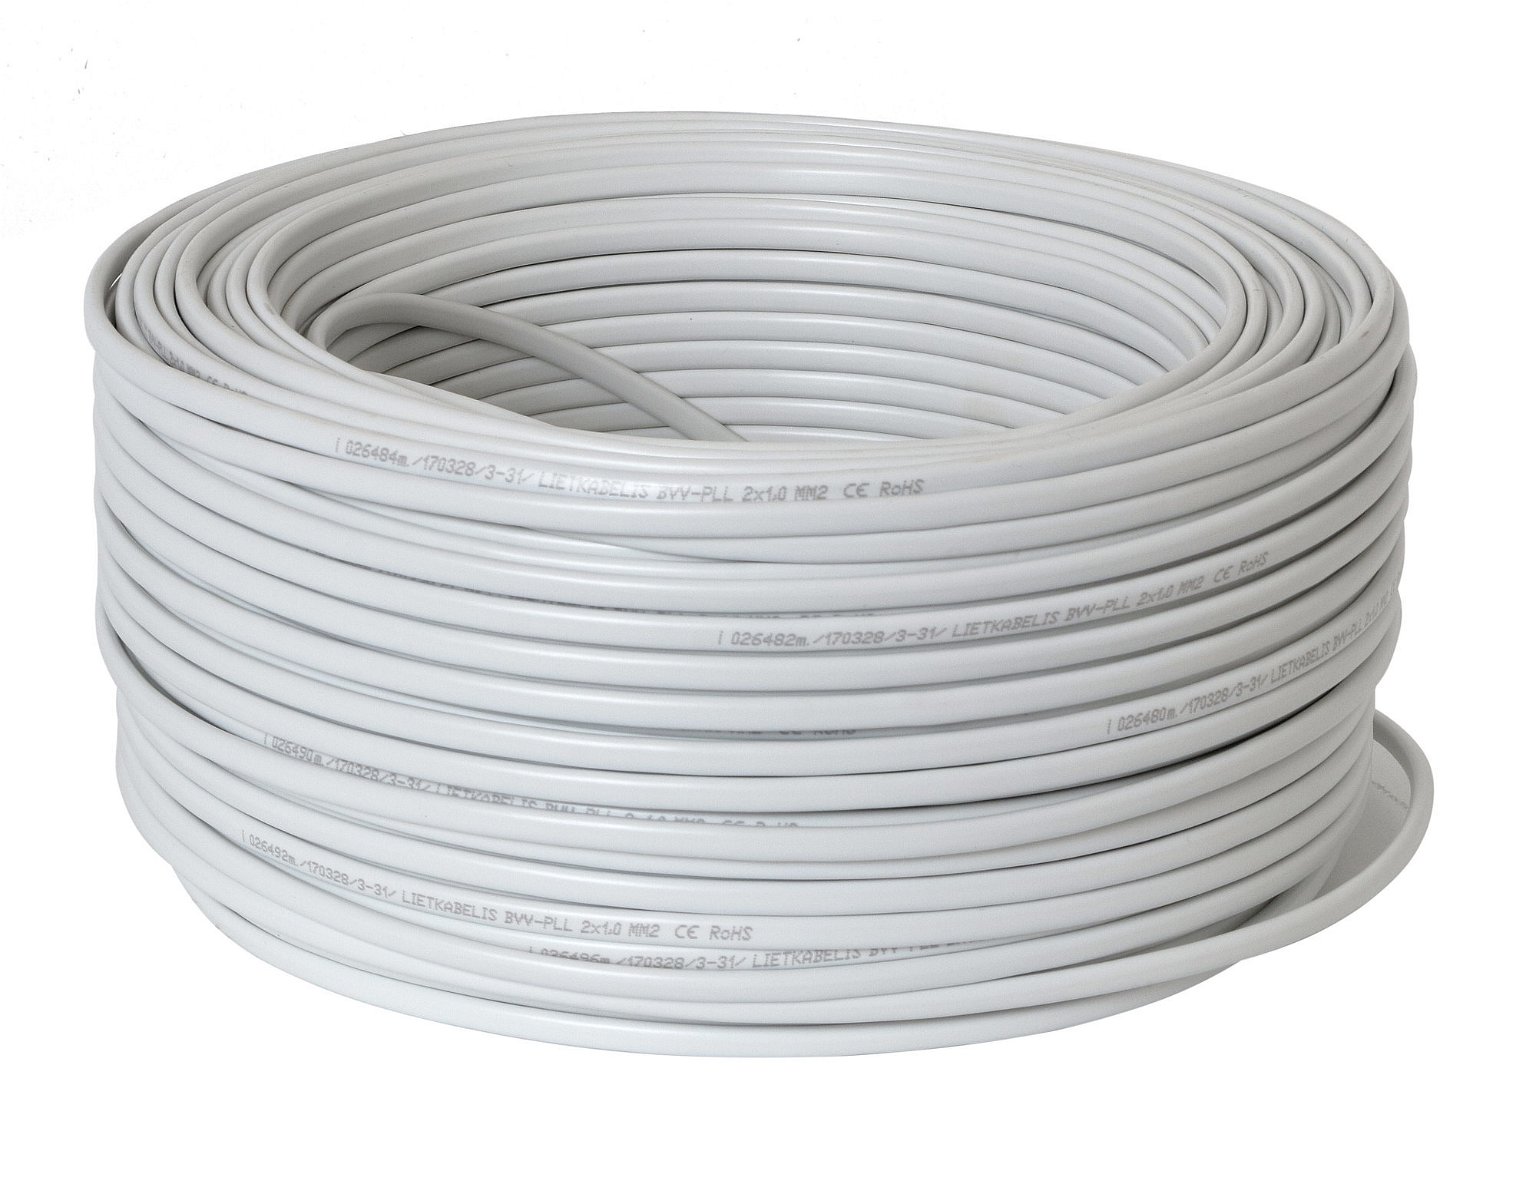 Instaliacinis kabelis, Lietkabelis OMYp (BVV-PLL), 2 x 1 mm², 100 m - 2